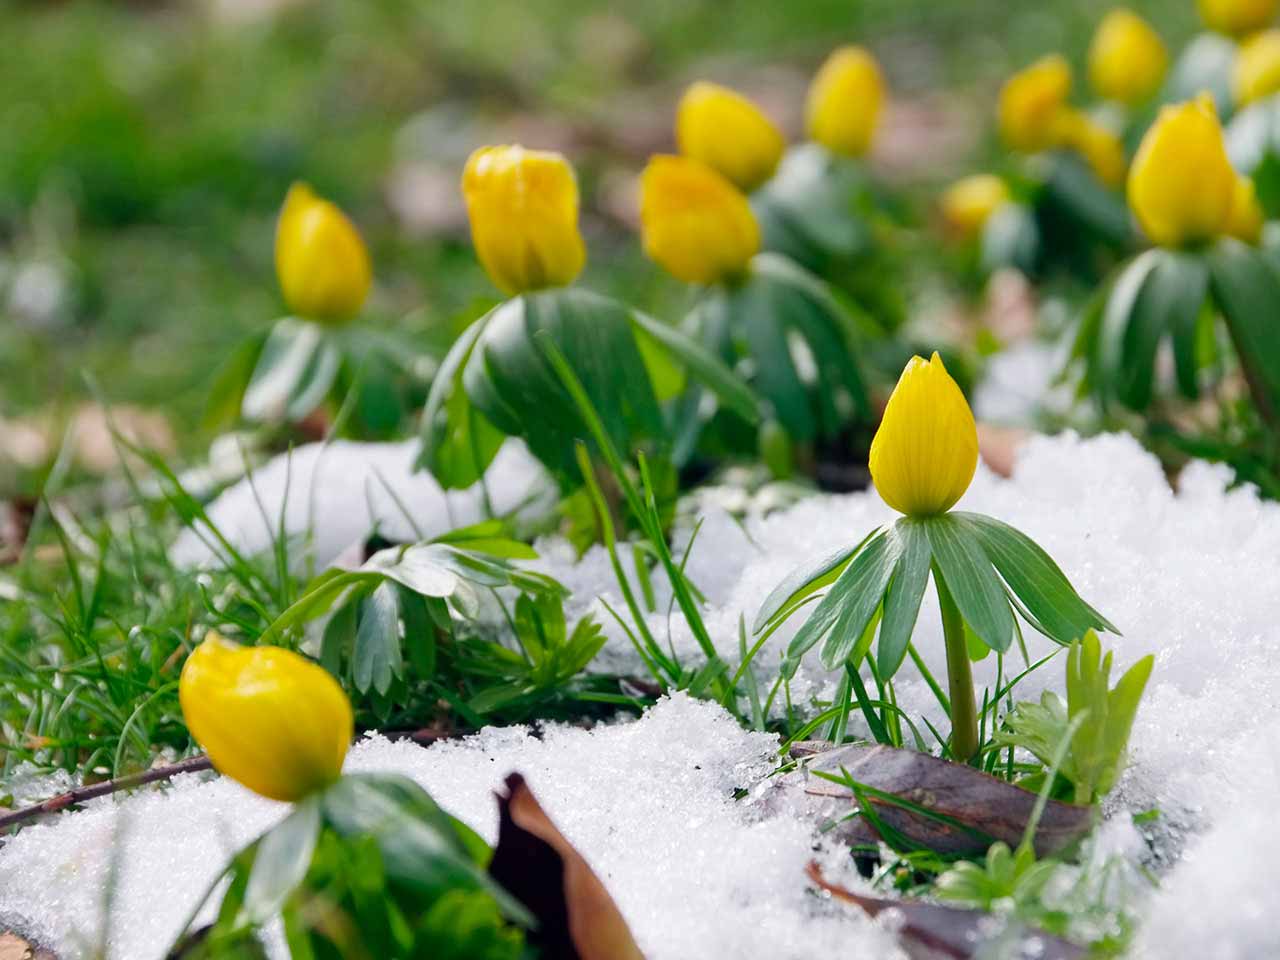 Yellow winter aconites pushing through the snow to flower